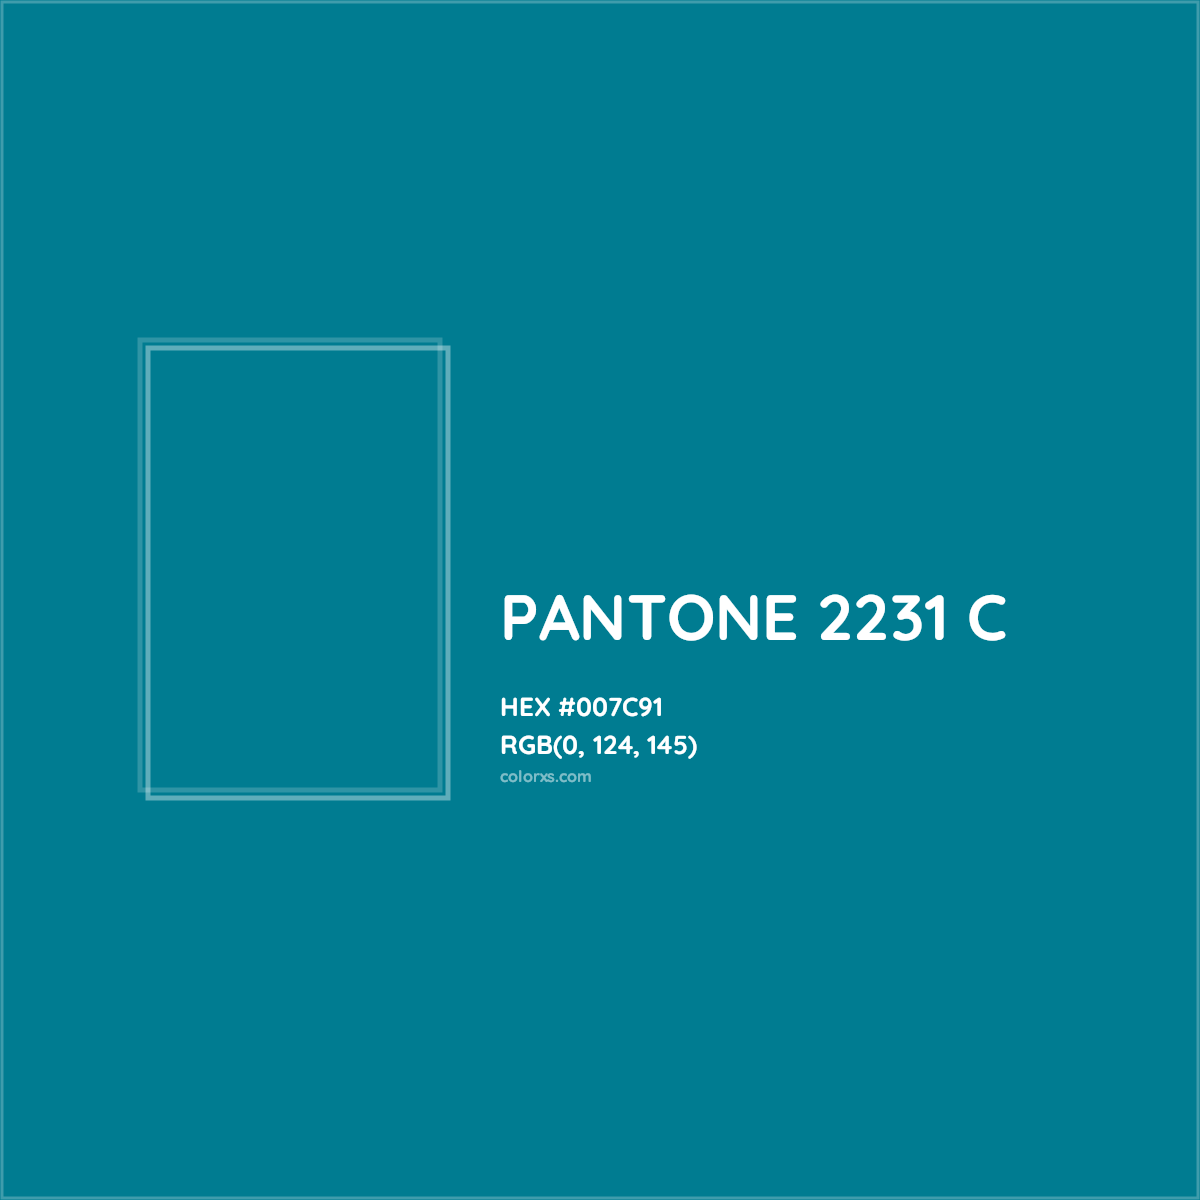 HEX #007C91 PANTONE 2231 C CMS Pantone PMS - Color Code